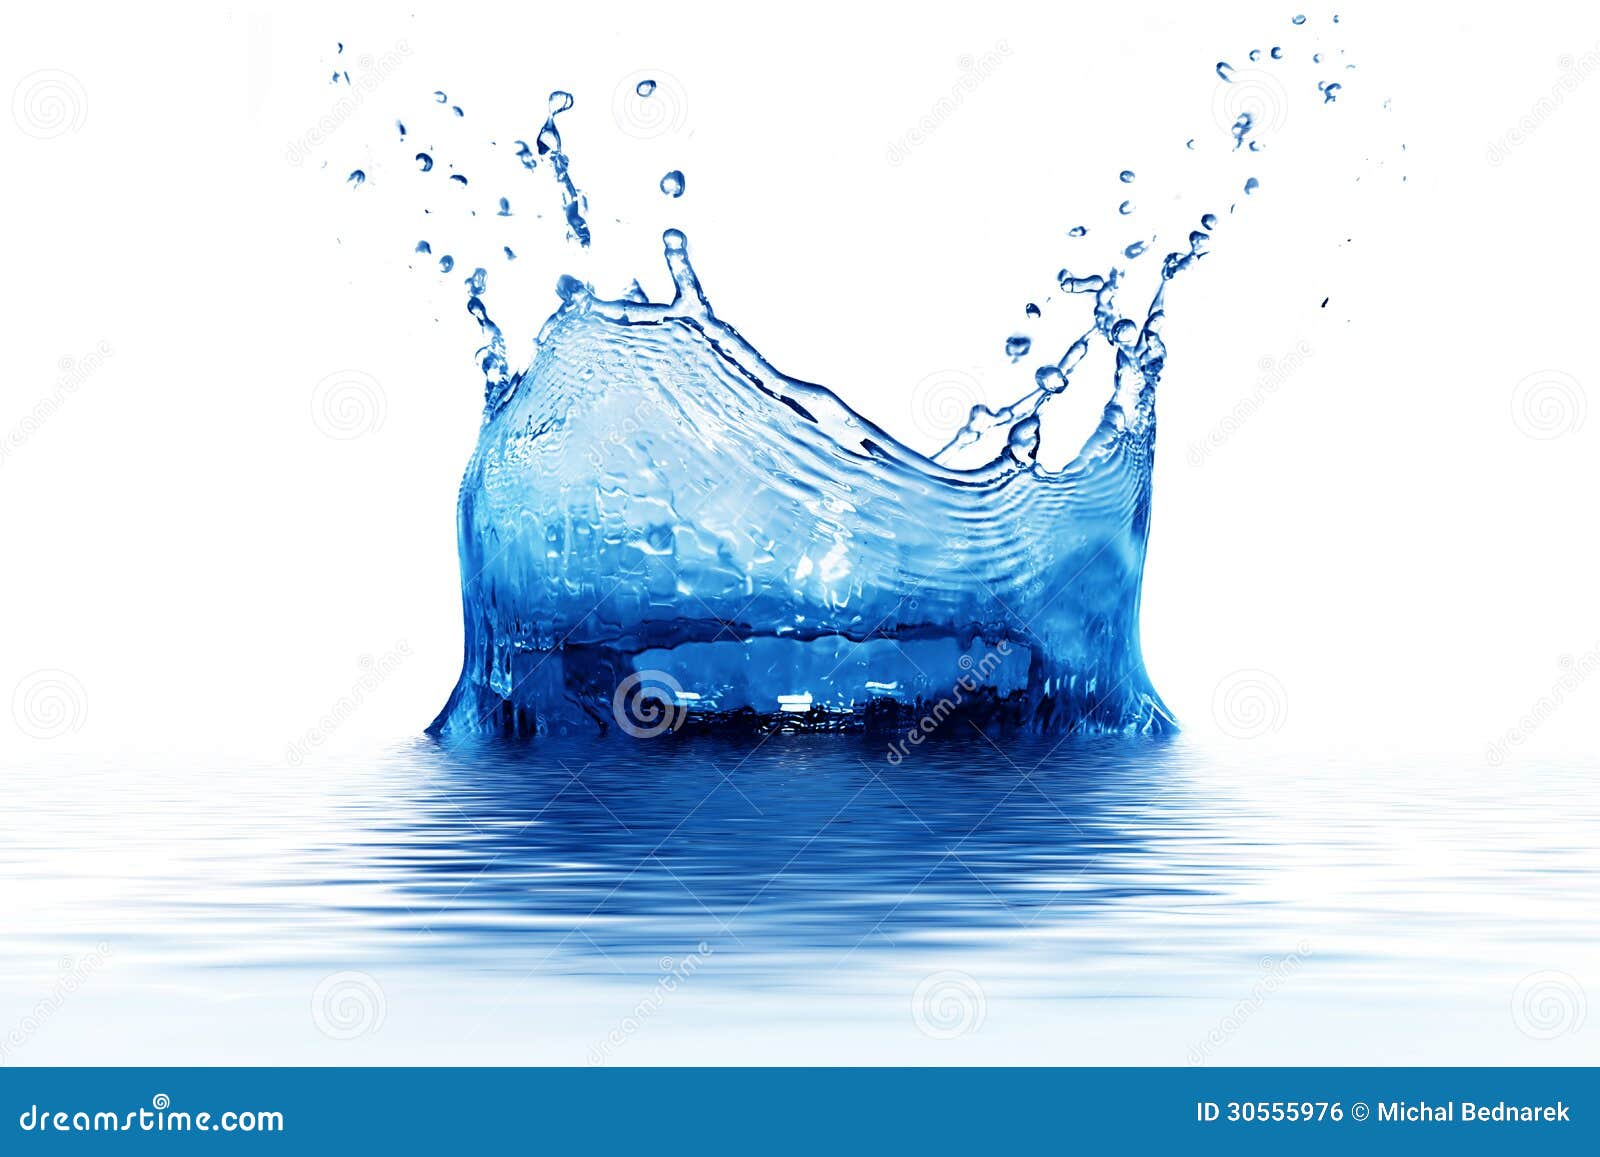 fresh clean water splash in blue